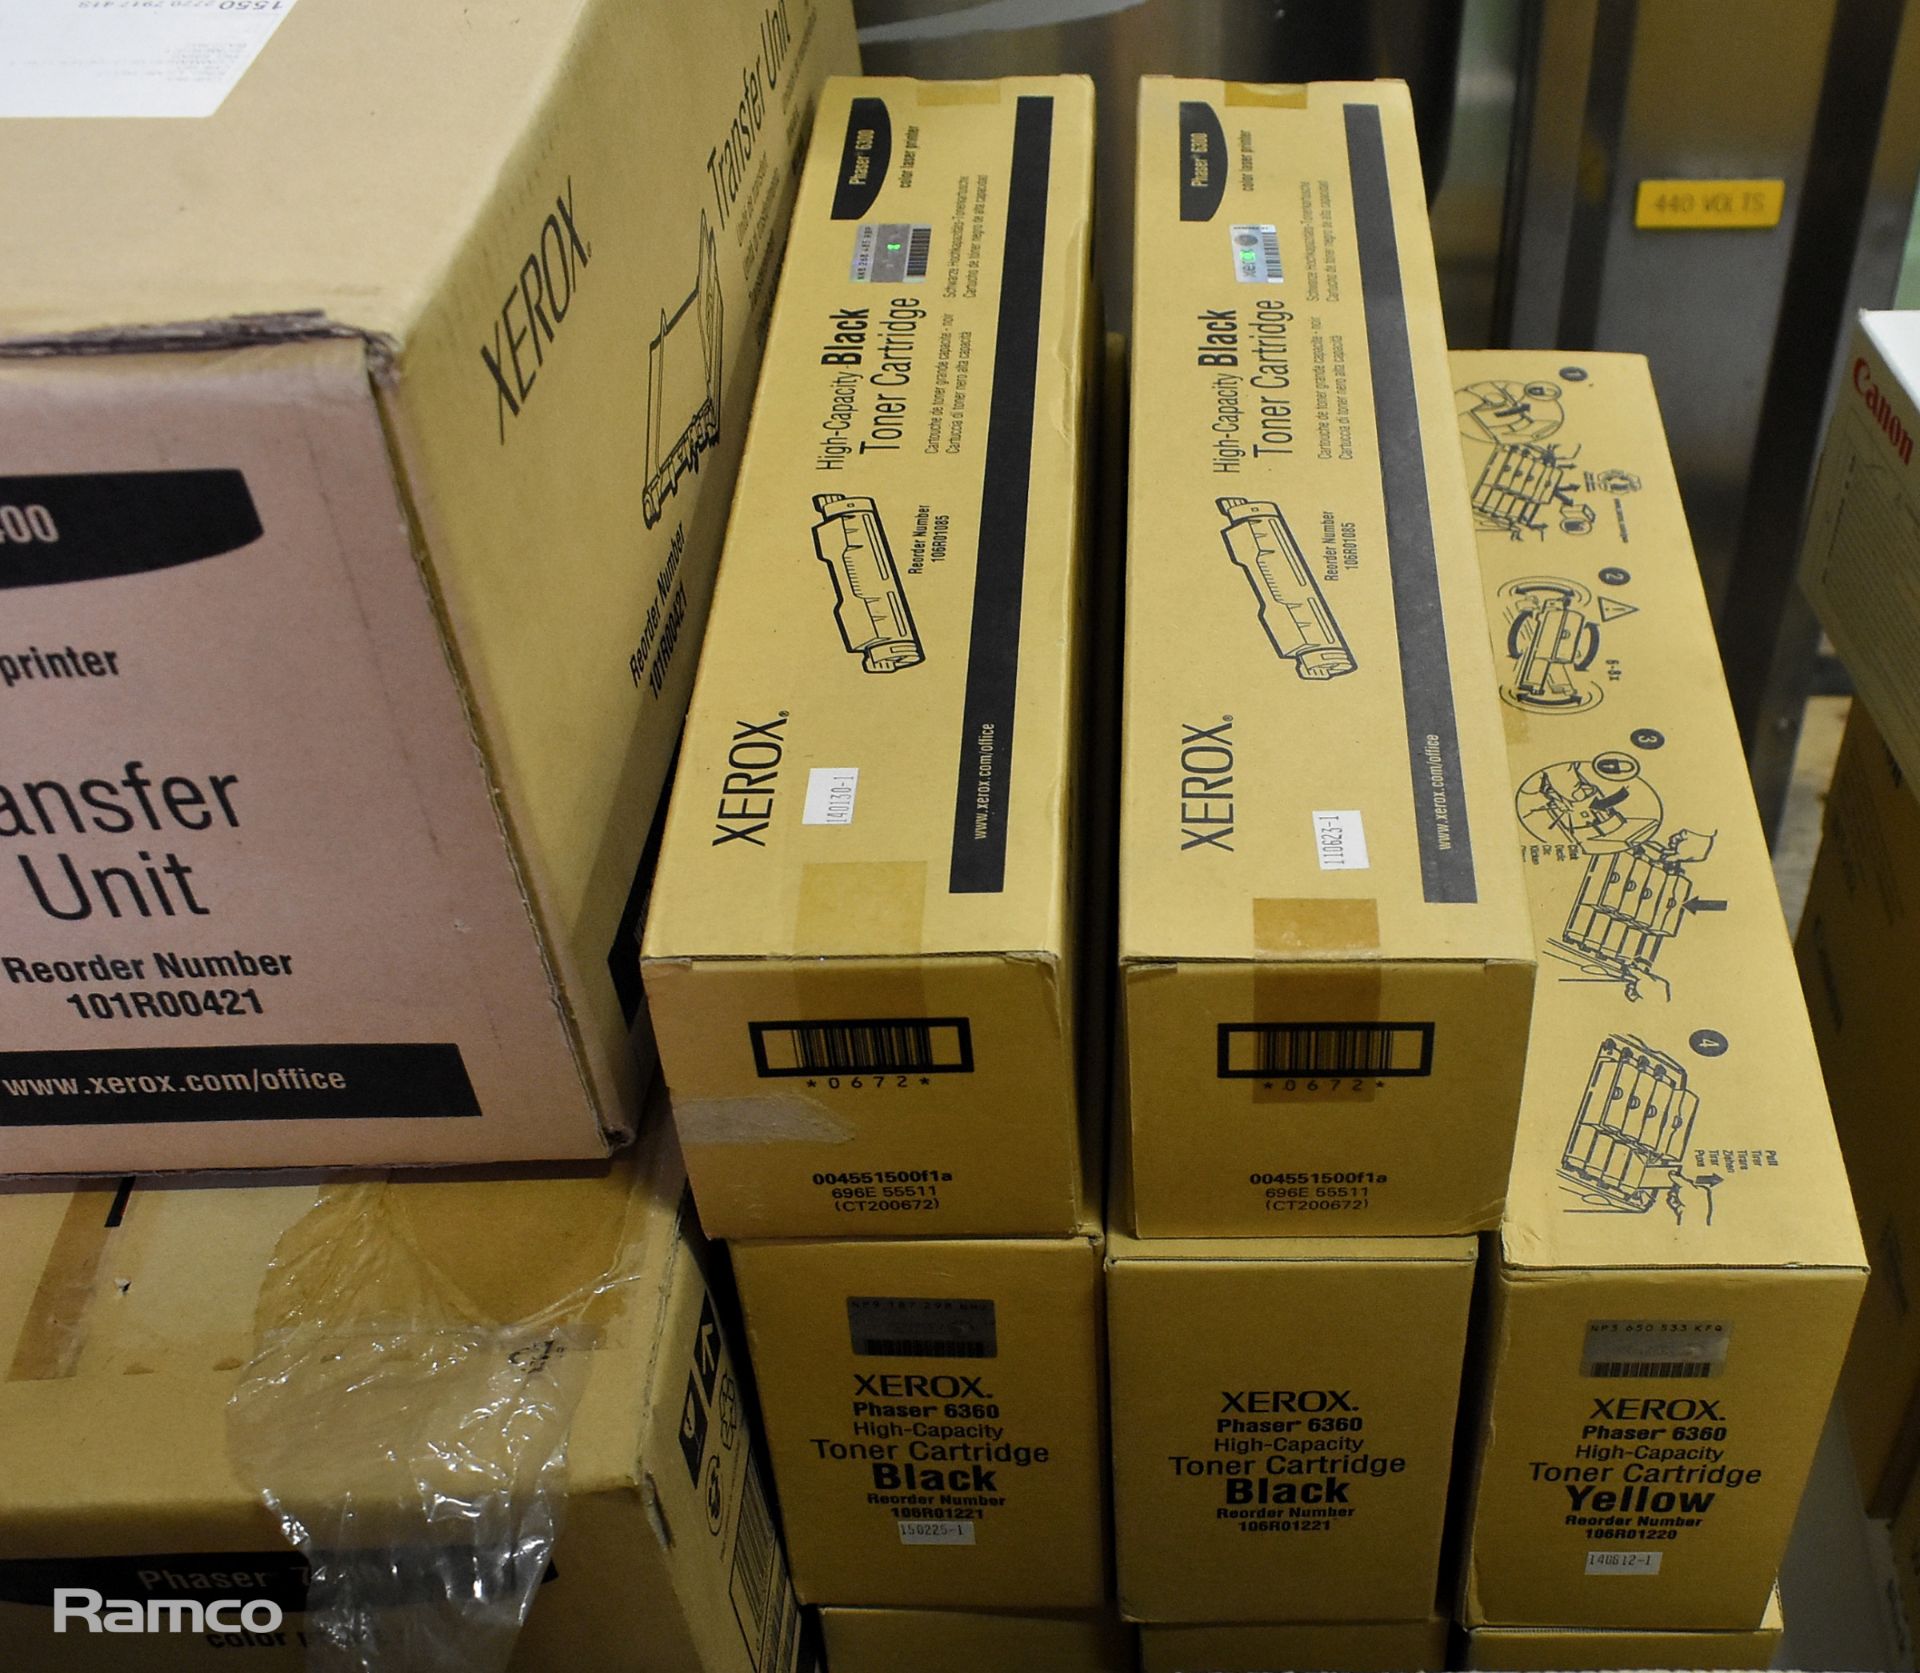 Printer toner cartridges - Xerox - Phaser 6700, Phaser 6360, Phaser 7400, Phaser 3600 - approx 45 - Image 6 of 7